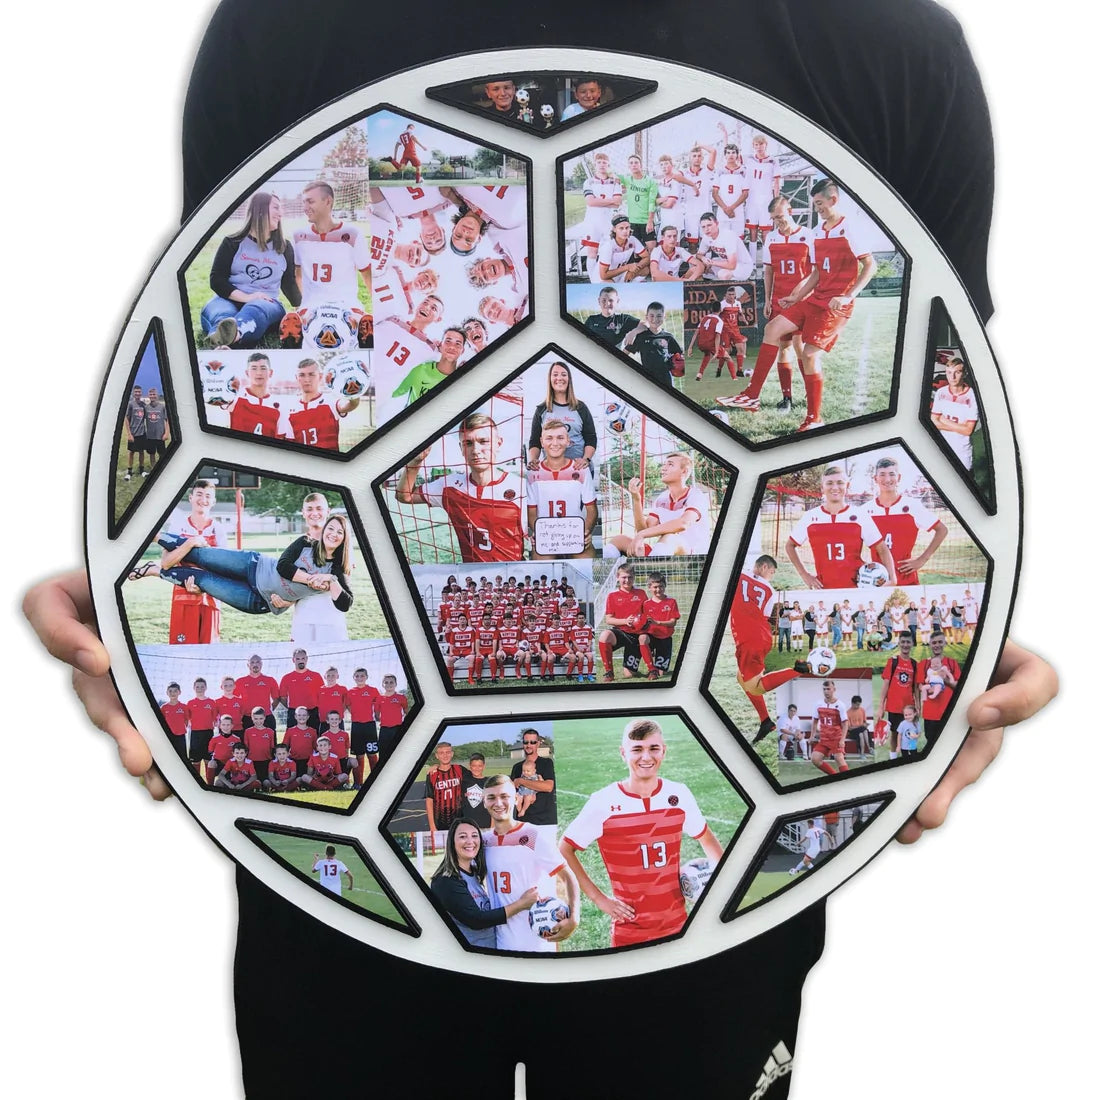 Soccer Ball Collage for Senior Night Gift Ideas!